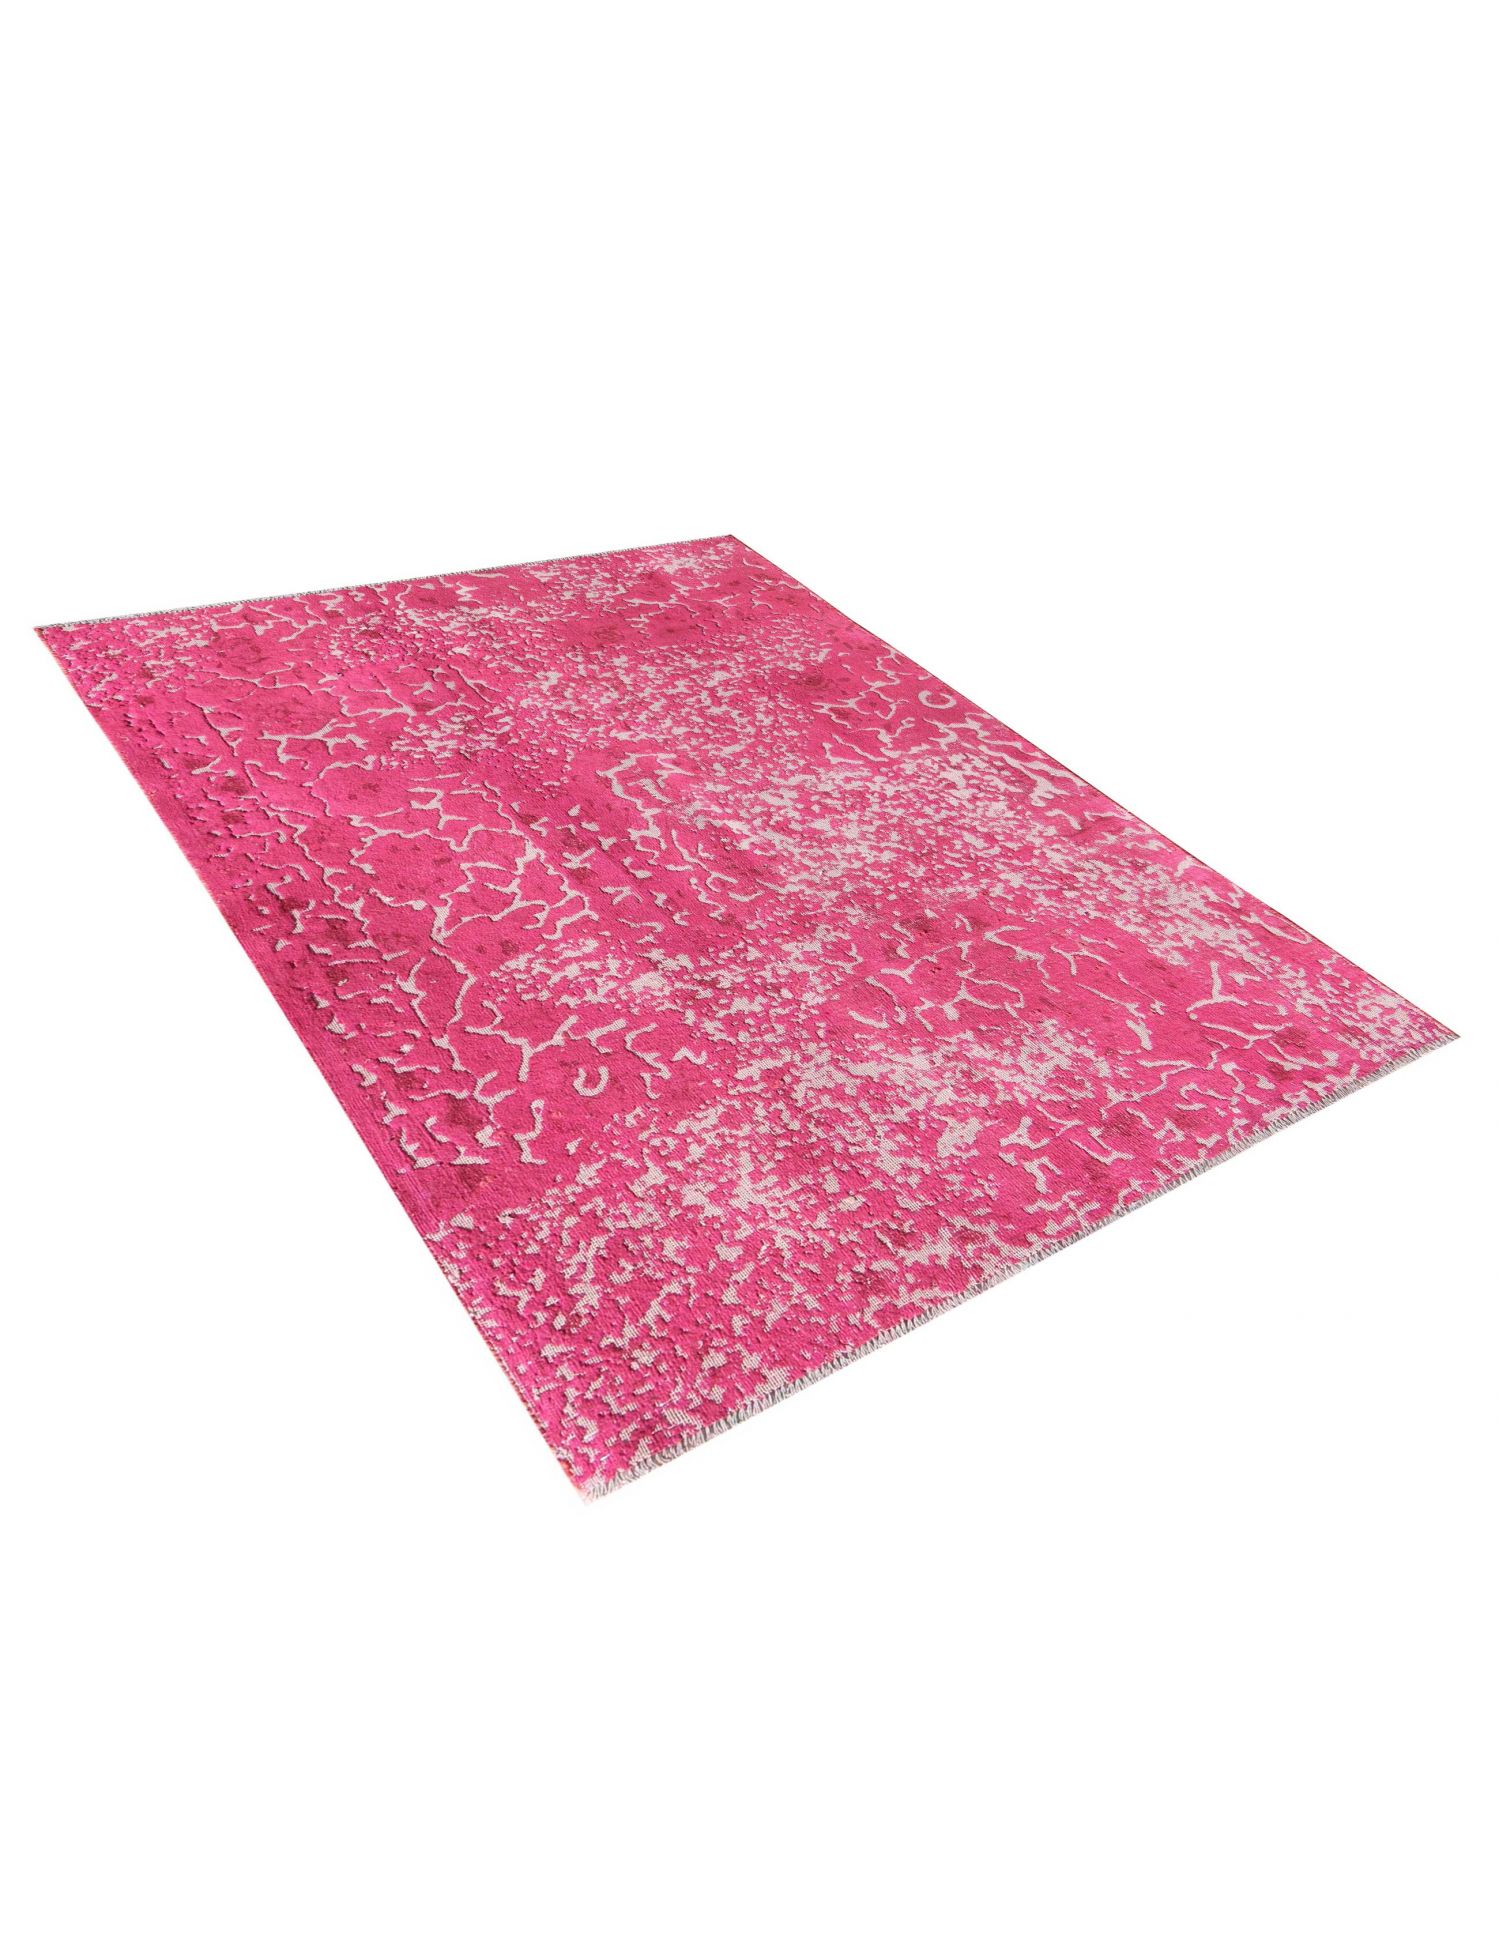 Perzisch Vintage Tapijt  roze <br/>159 x 127 cm